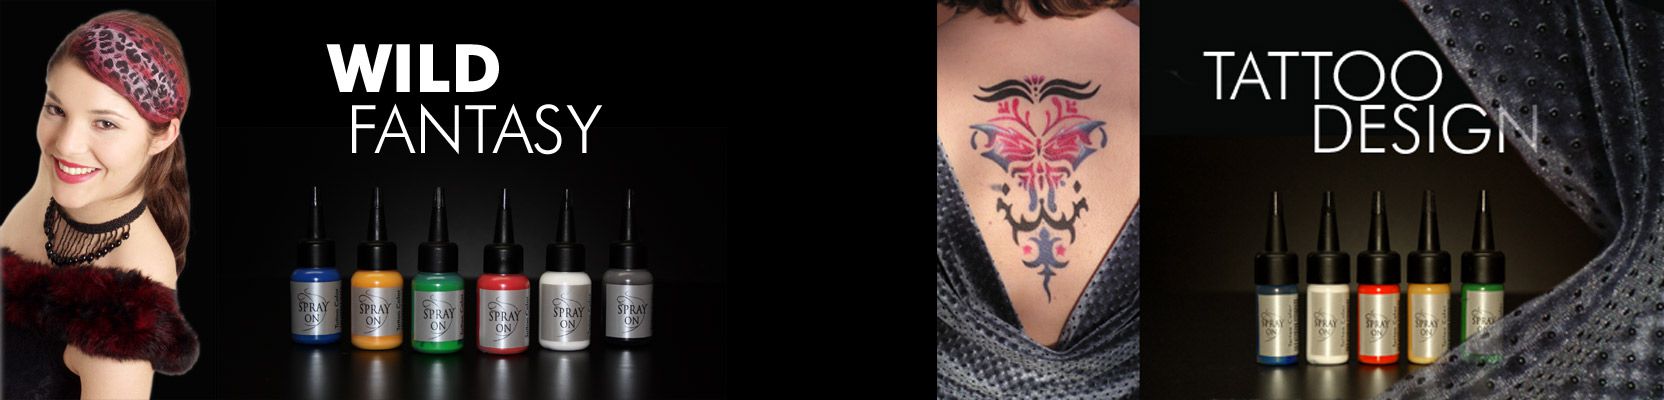 Airbrush Tattoo Schablonen Airbrush Make up Tanning Nails Farbe